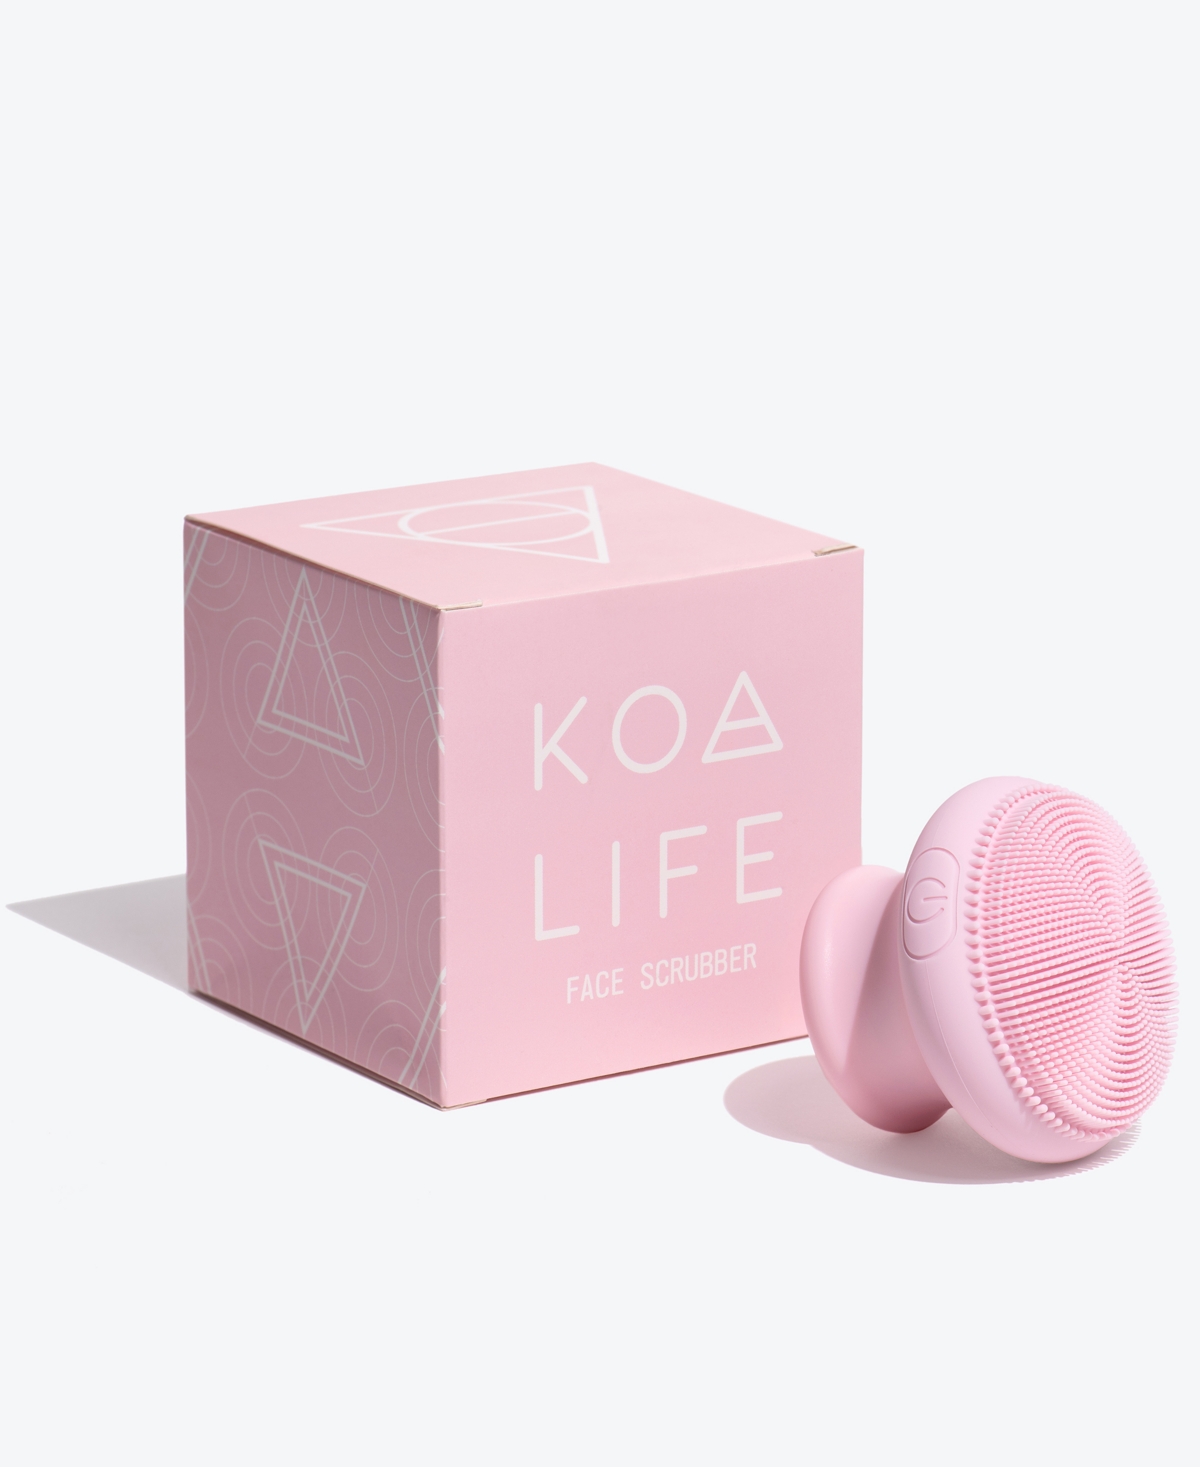 Koa Life Electric Scrubber Facial Cleansing Tool